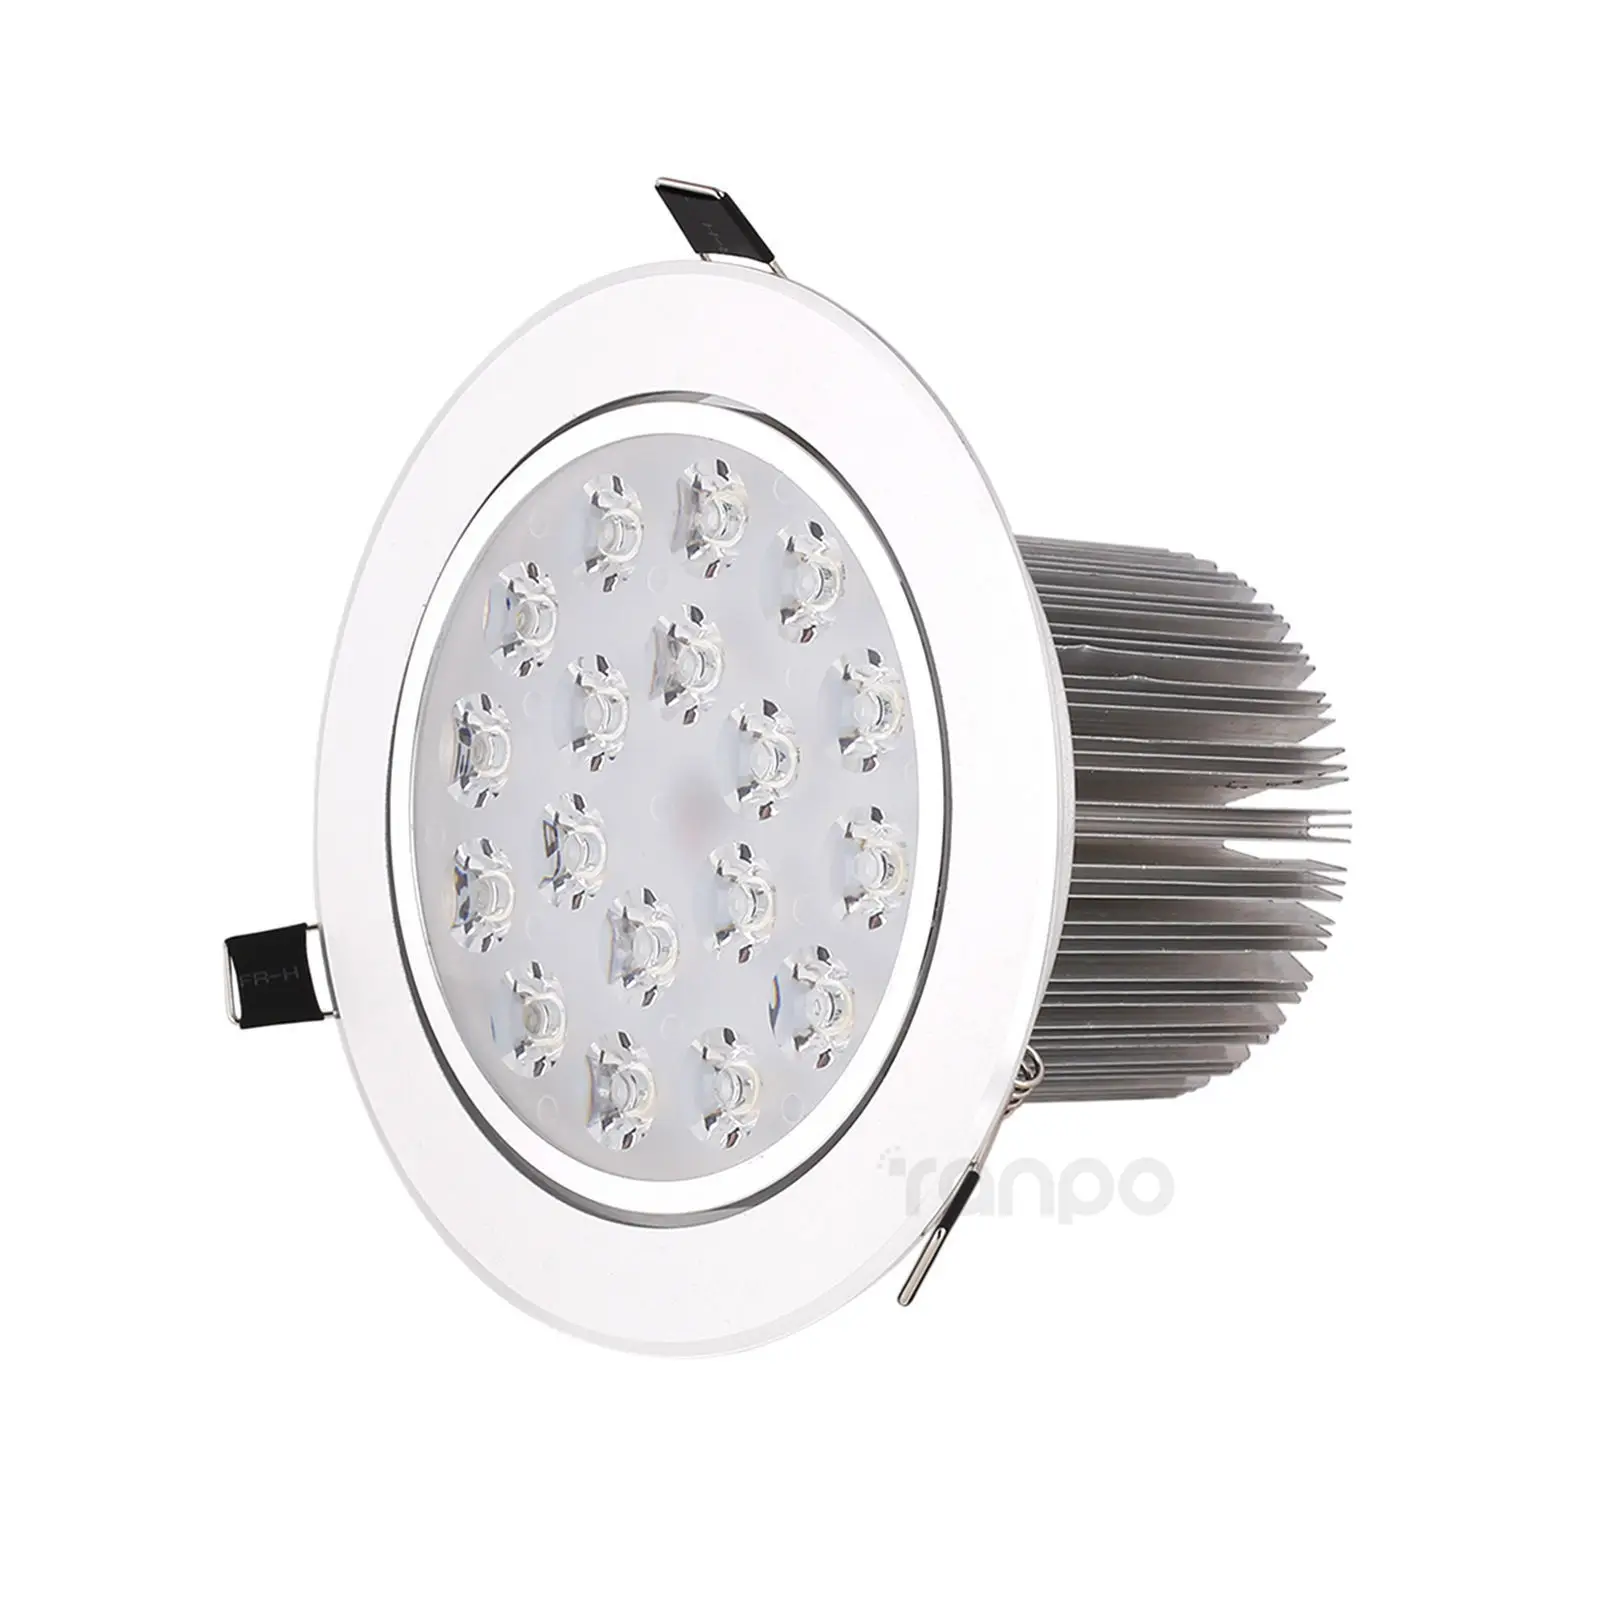 3W 5W 7W 9W 12W 15W 18W LED Recessed Ceiling Down Light White Lamp AC 220V 110V Downlight Spotlight for Home Living Room Hotel